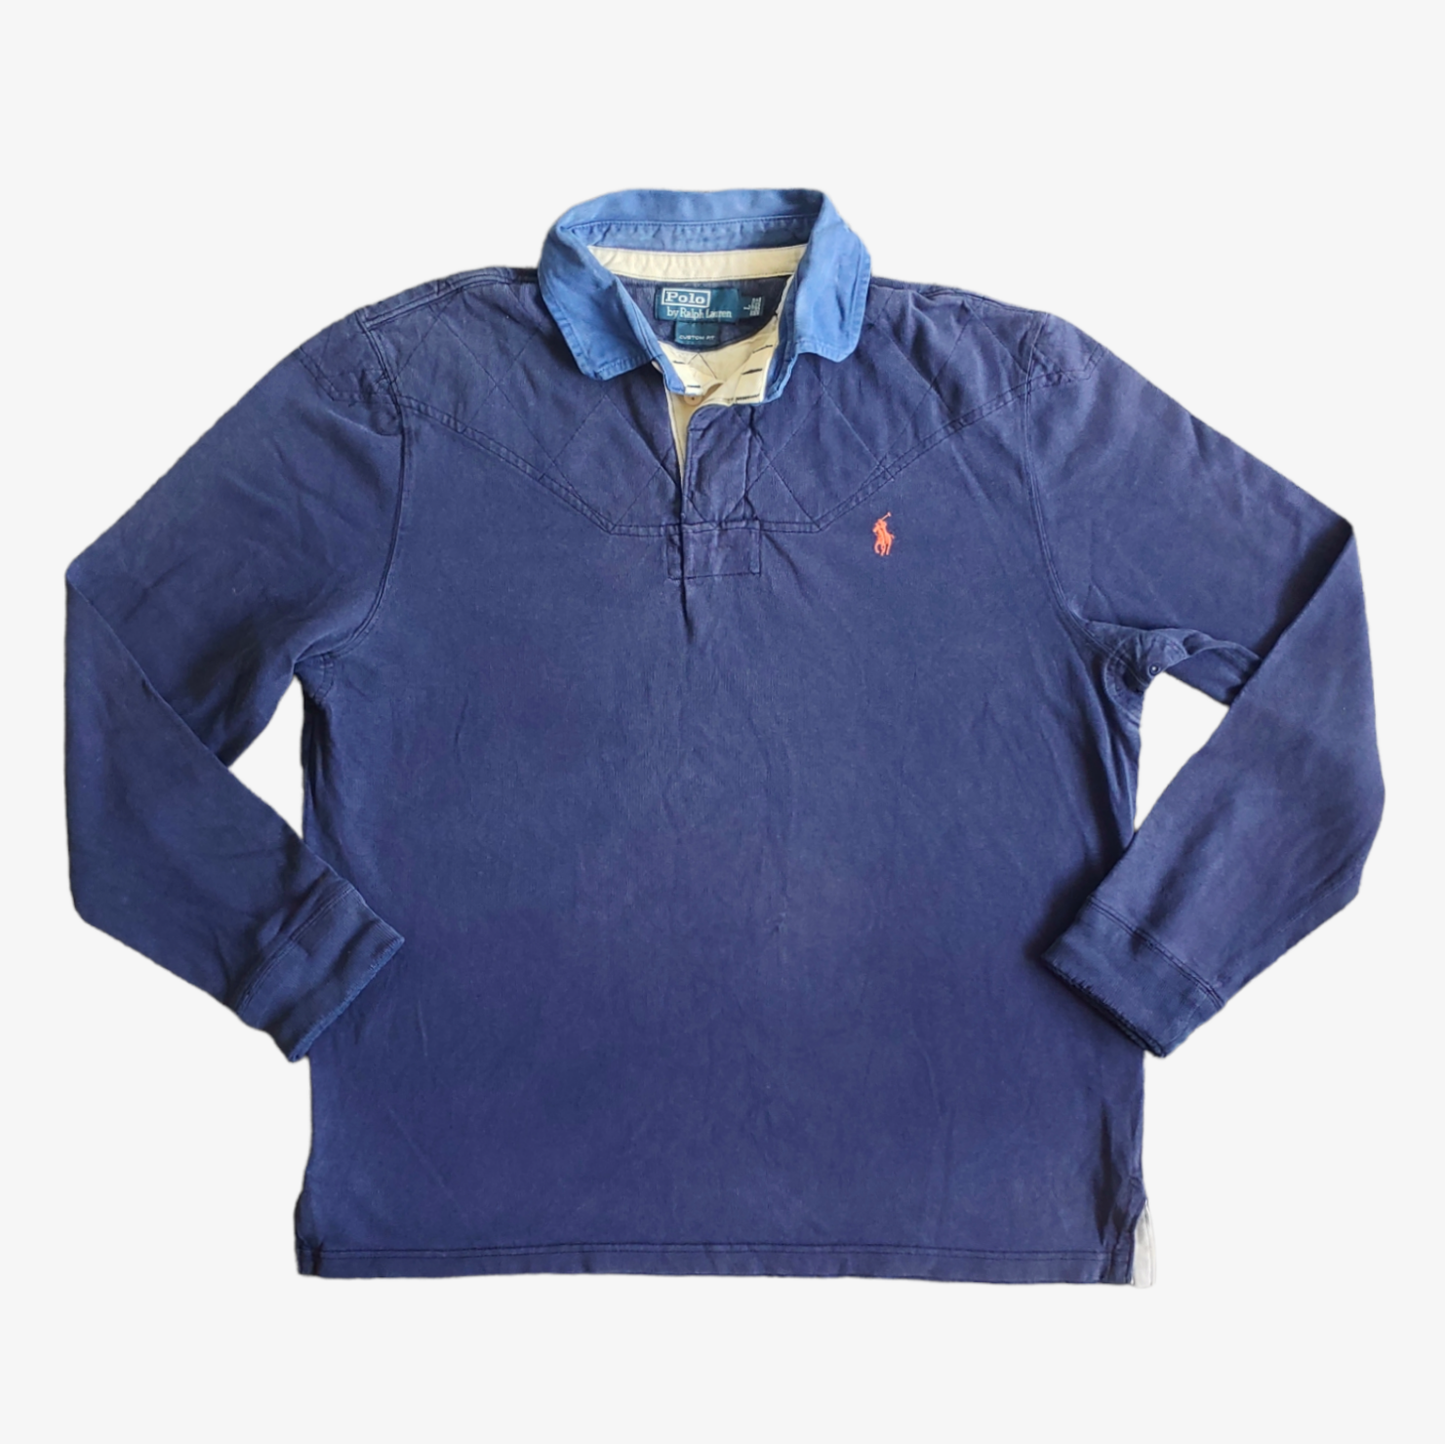 Vintage 90s Polo Ralph Lauren Blue Long Sleeve Rugby Shirt - Casspios Dream